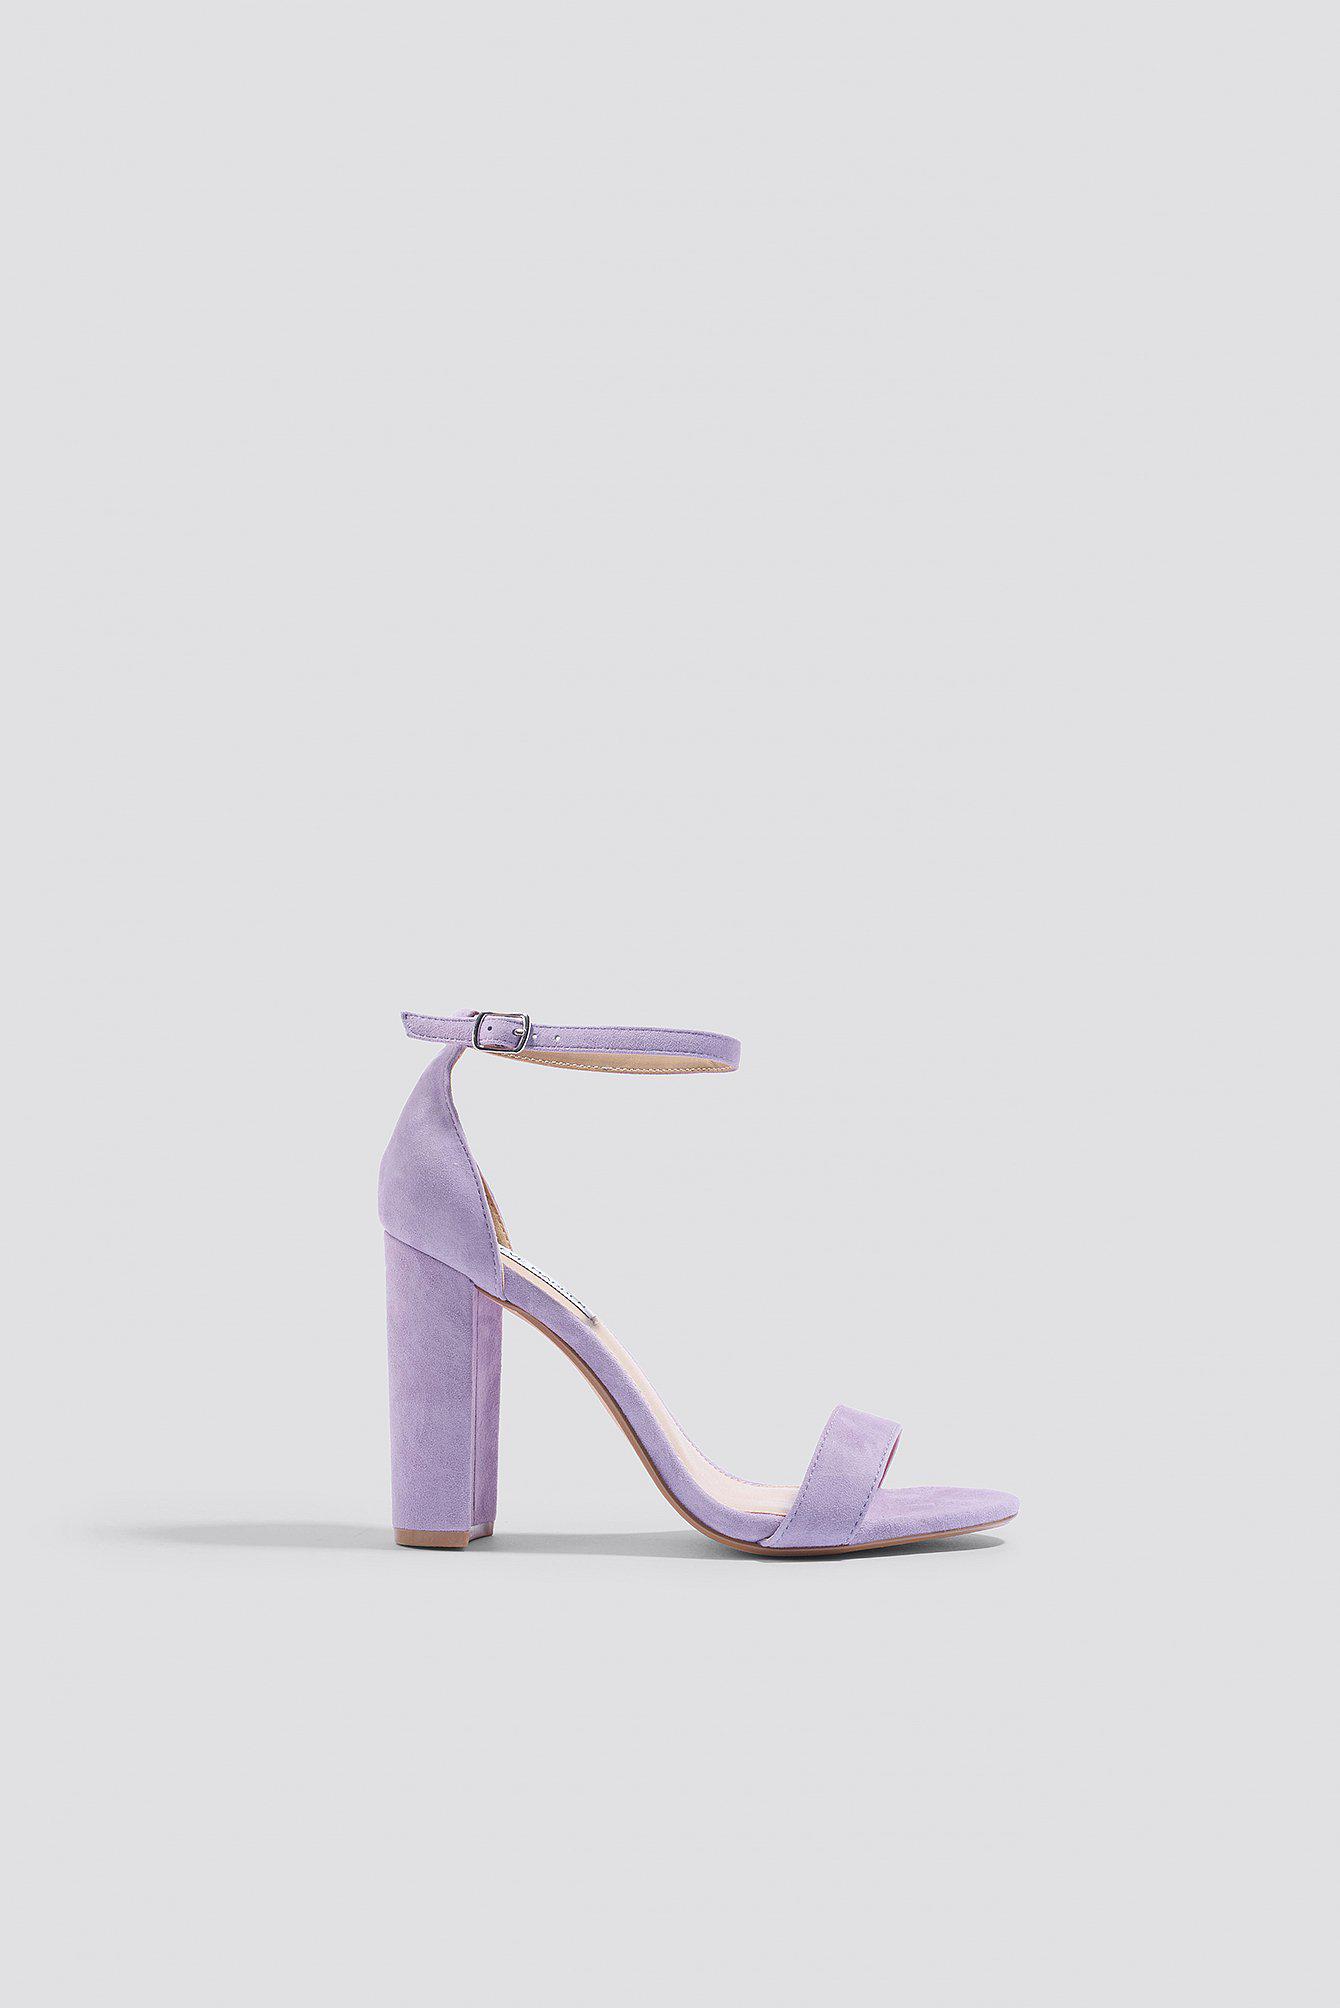 Steve Madden Carrson Sandal in Purple | Lyst